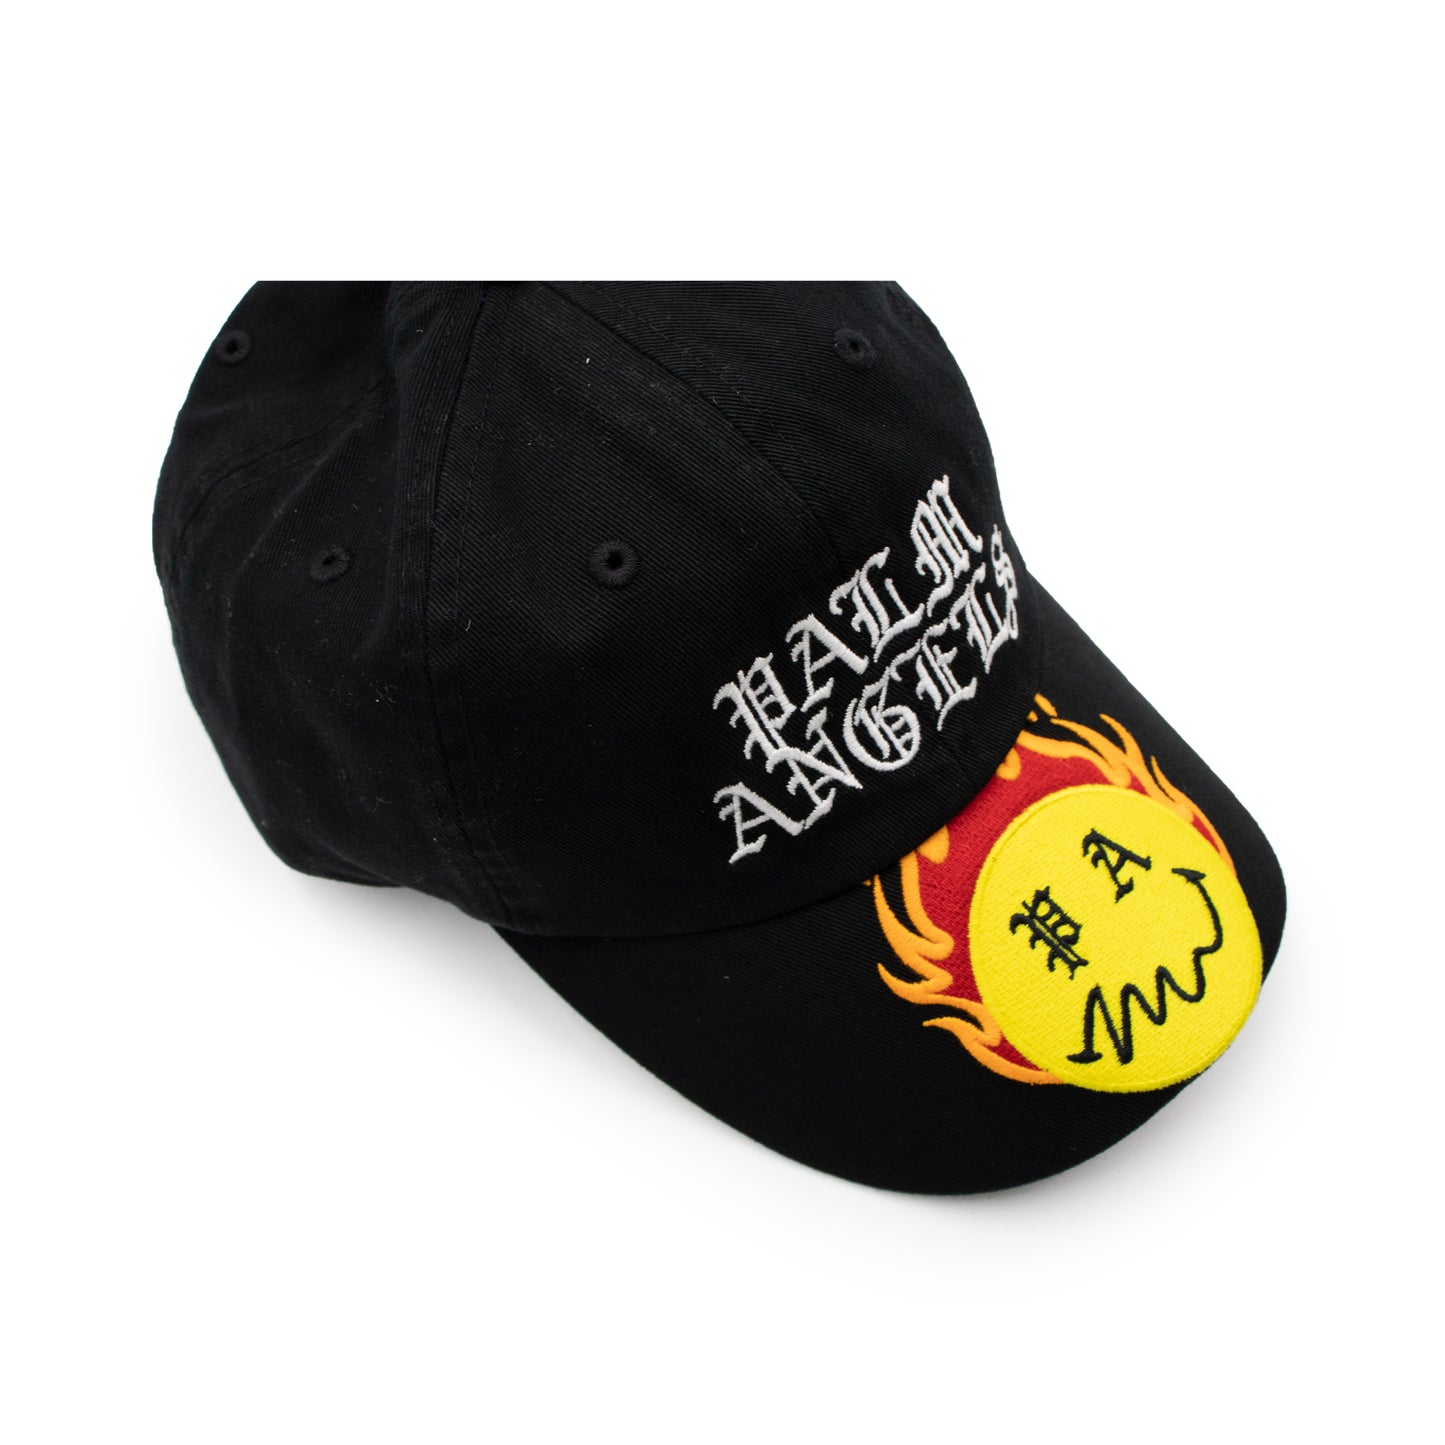 Burning Head Cap in Black/Yellow